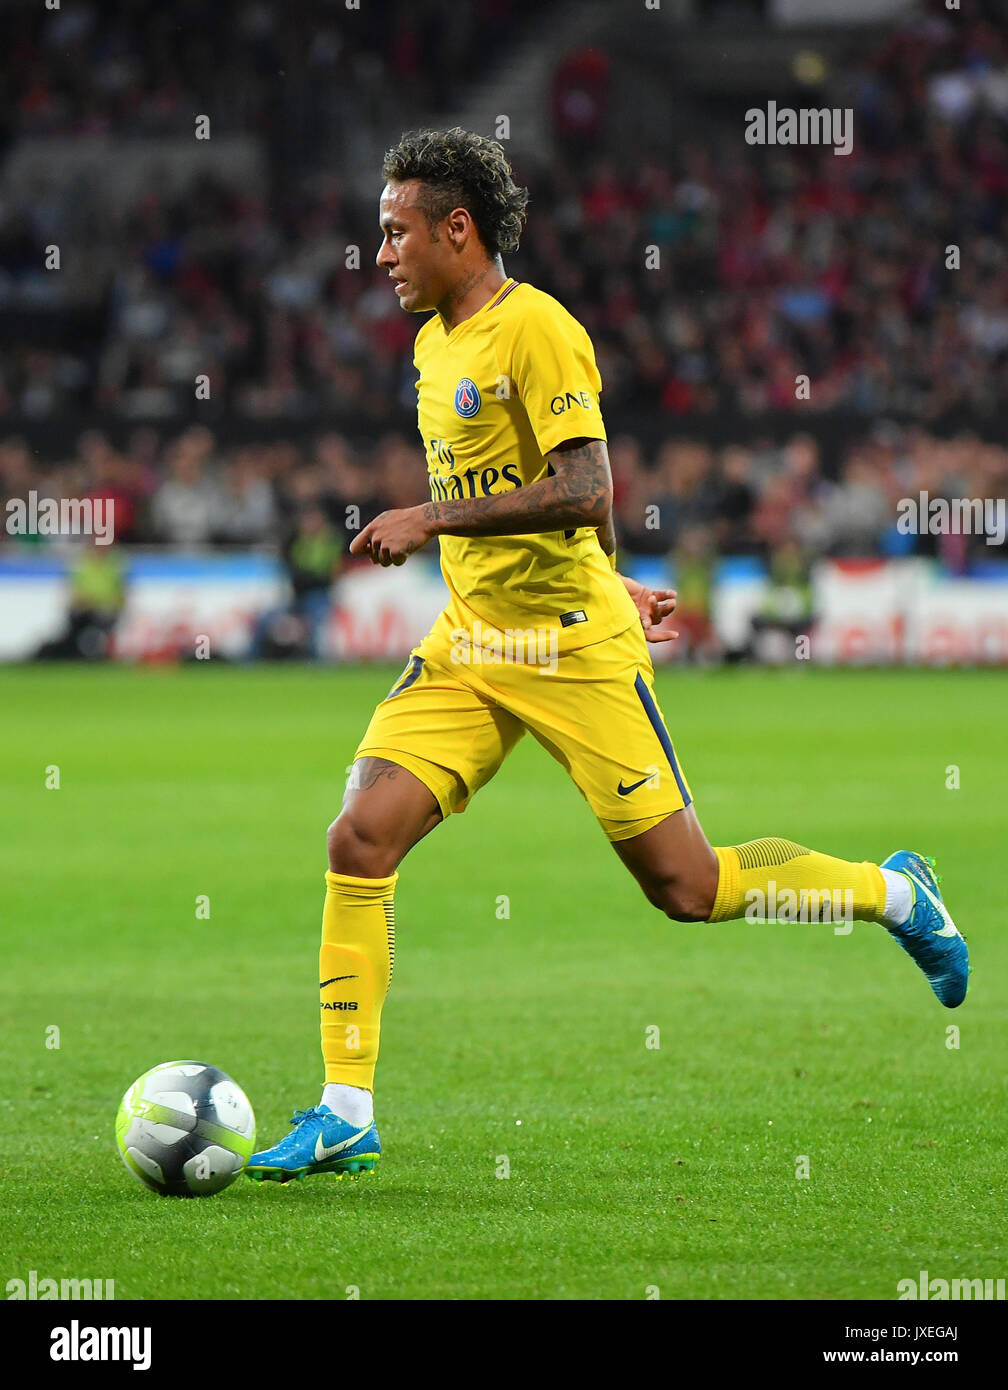 Paris Saint-Germain's Brazilian forward Neymar runs during the French L1 football match Paris Saint-Germain (PSG) vs En Avant Guingamp (EAG) at the Roudourou stadium in Guingamp on August 13, 2017. Stock Photo